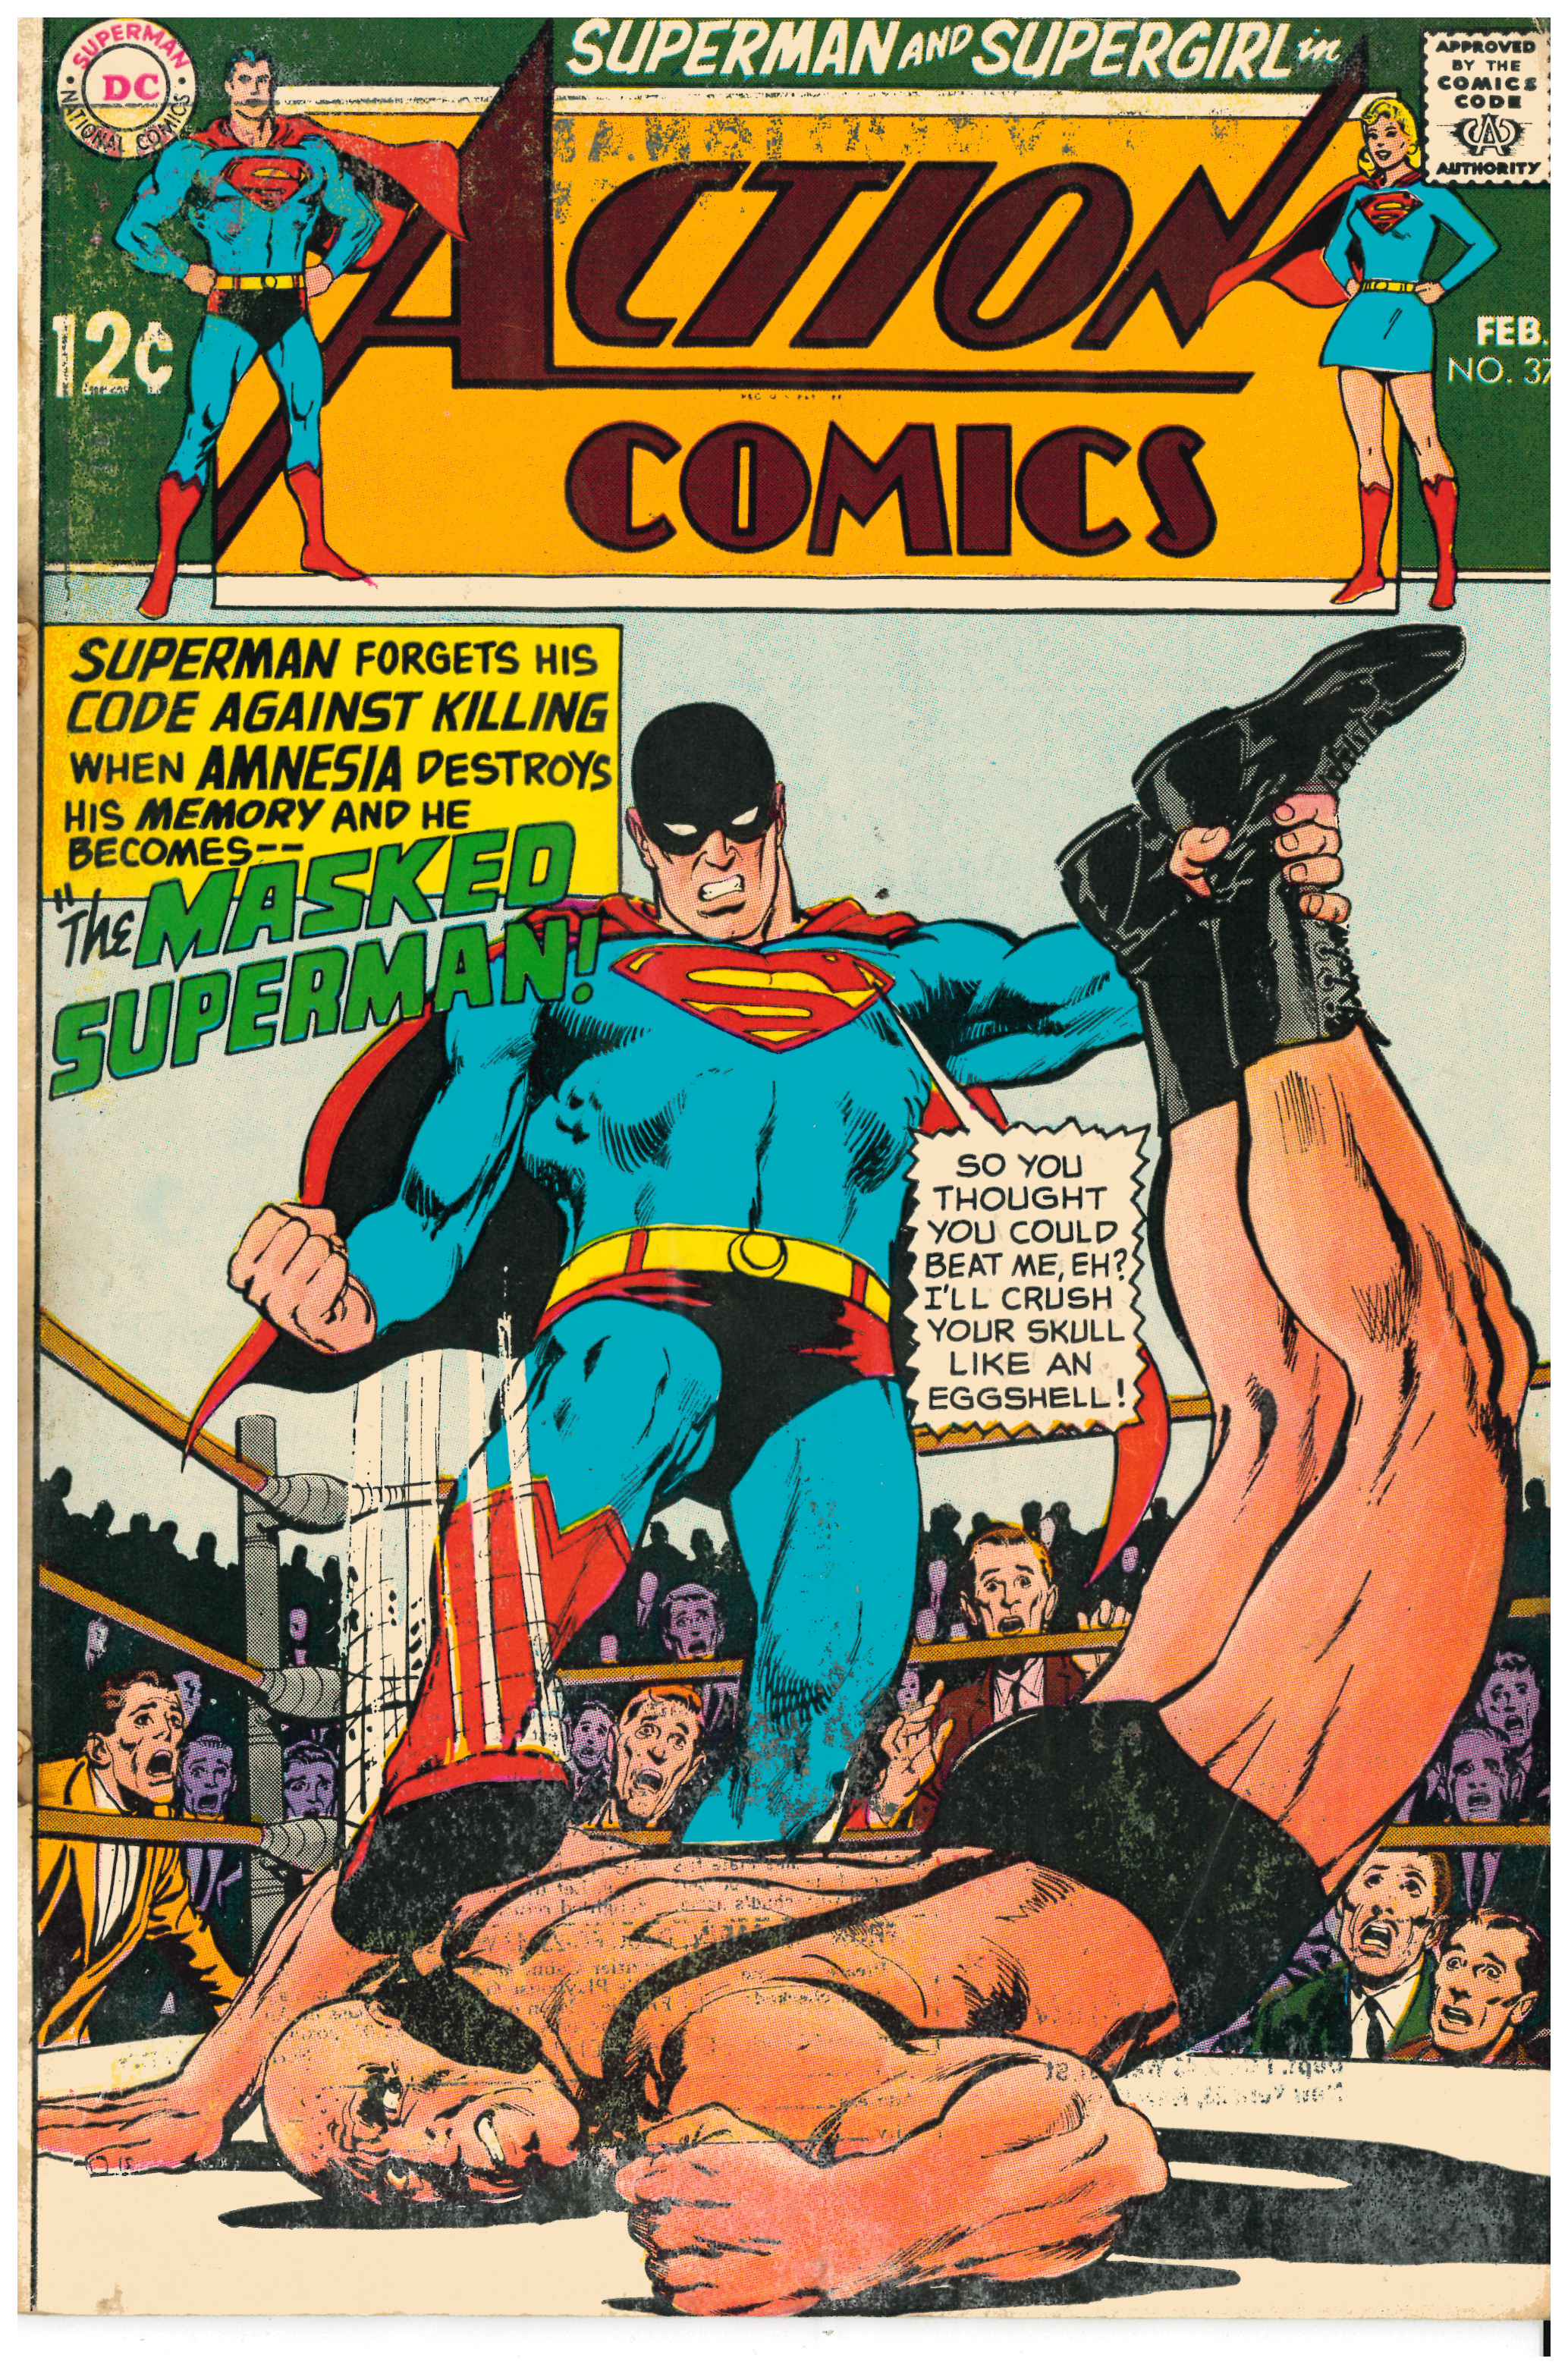 Action Comics #372